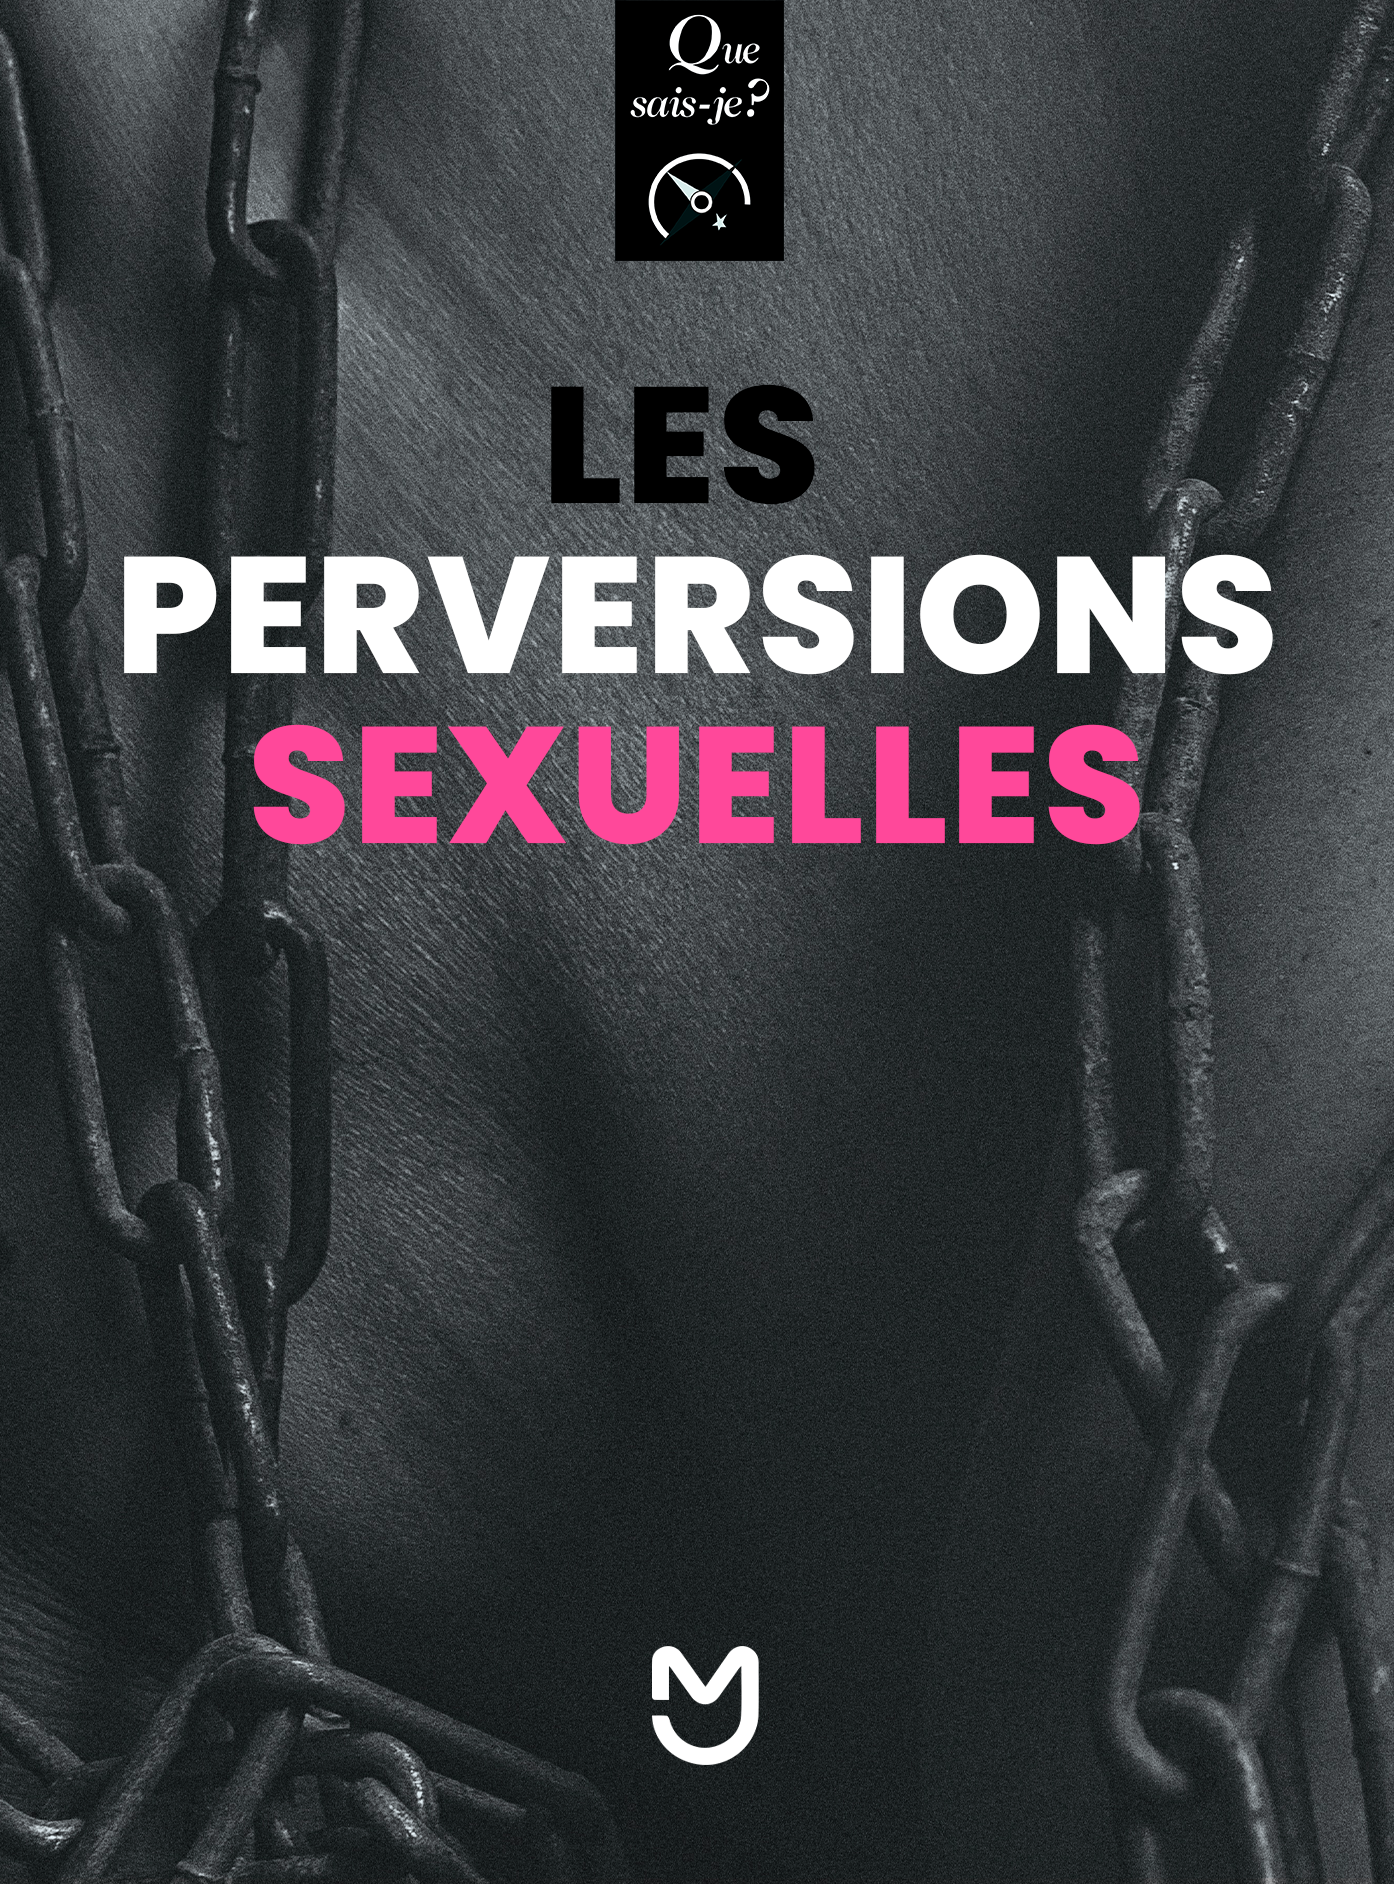 Les perversions sexuelles